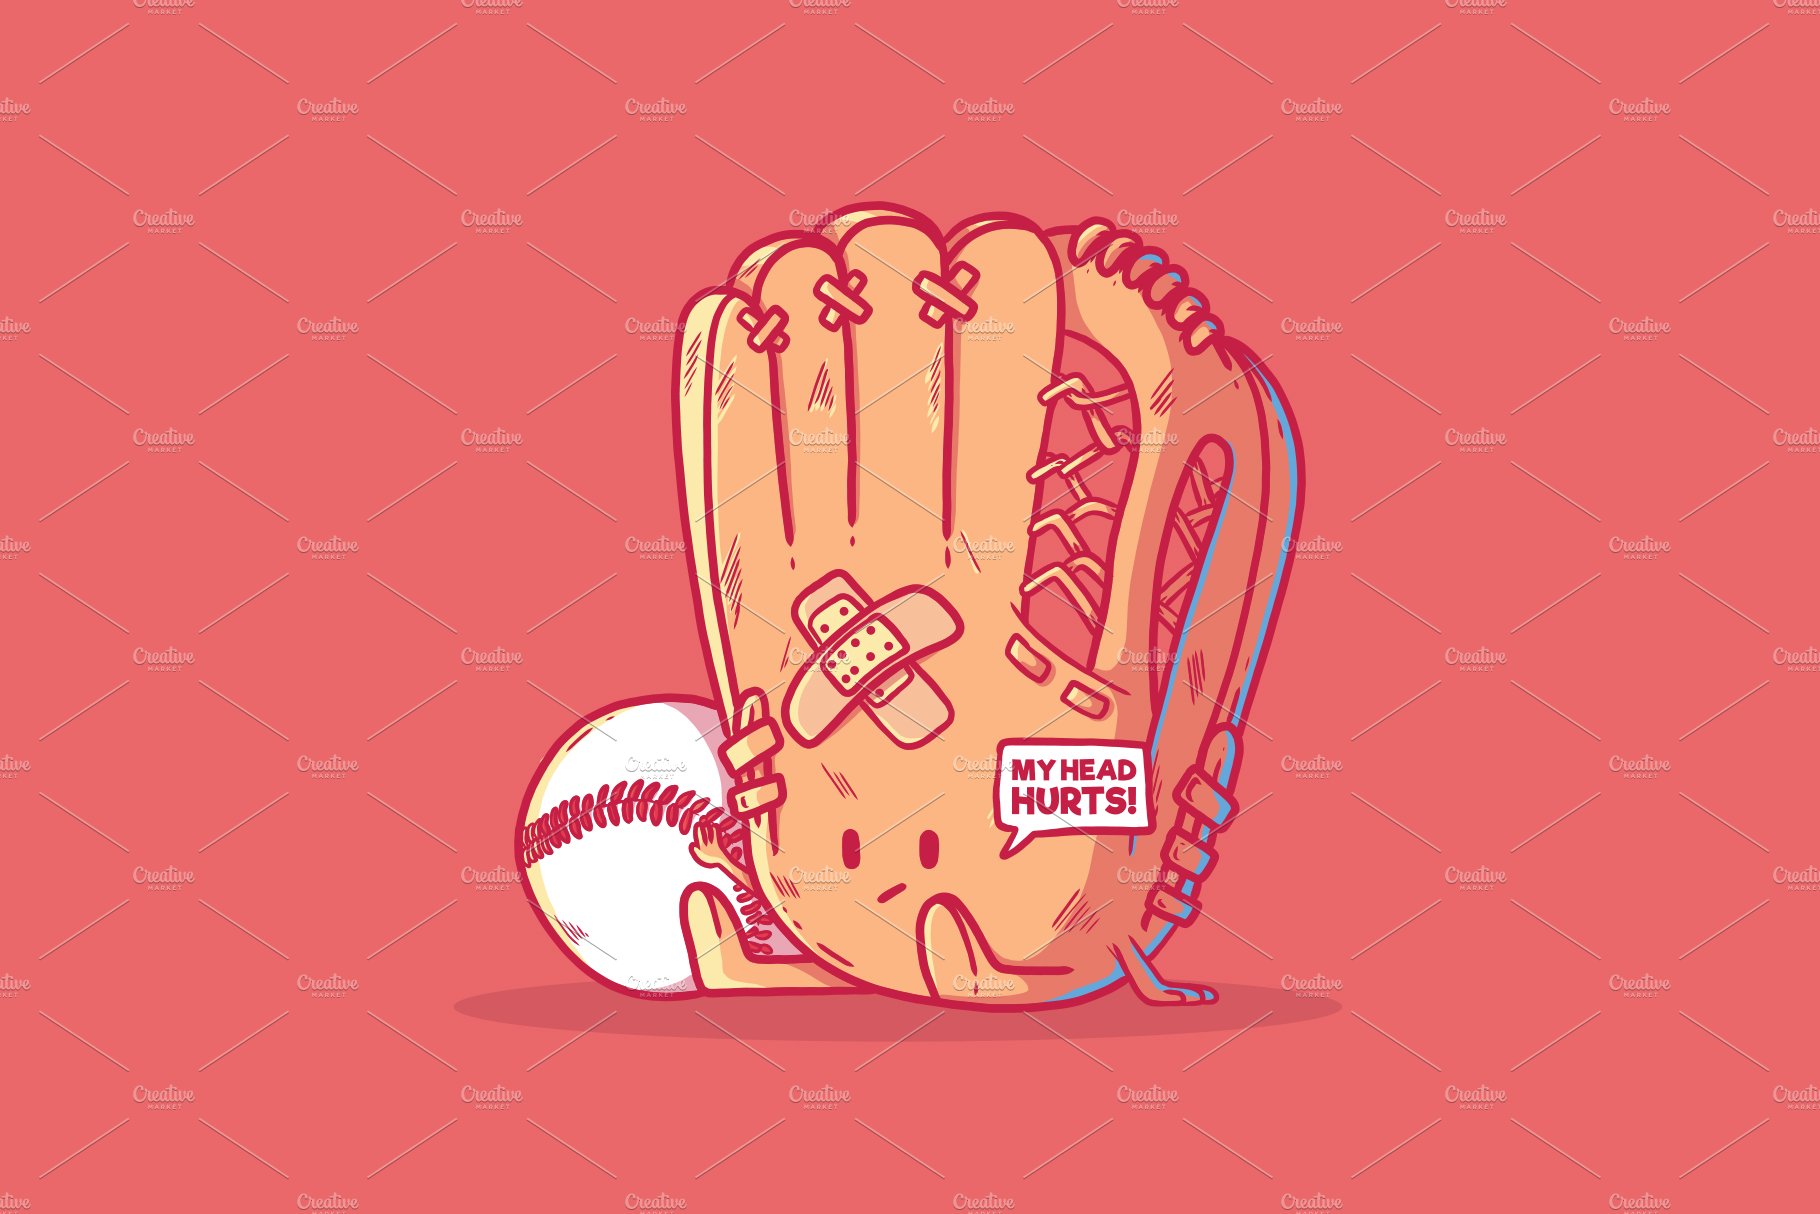 Baseball Glove cover image.